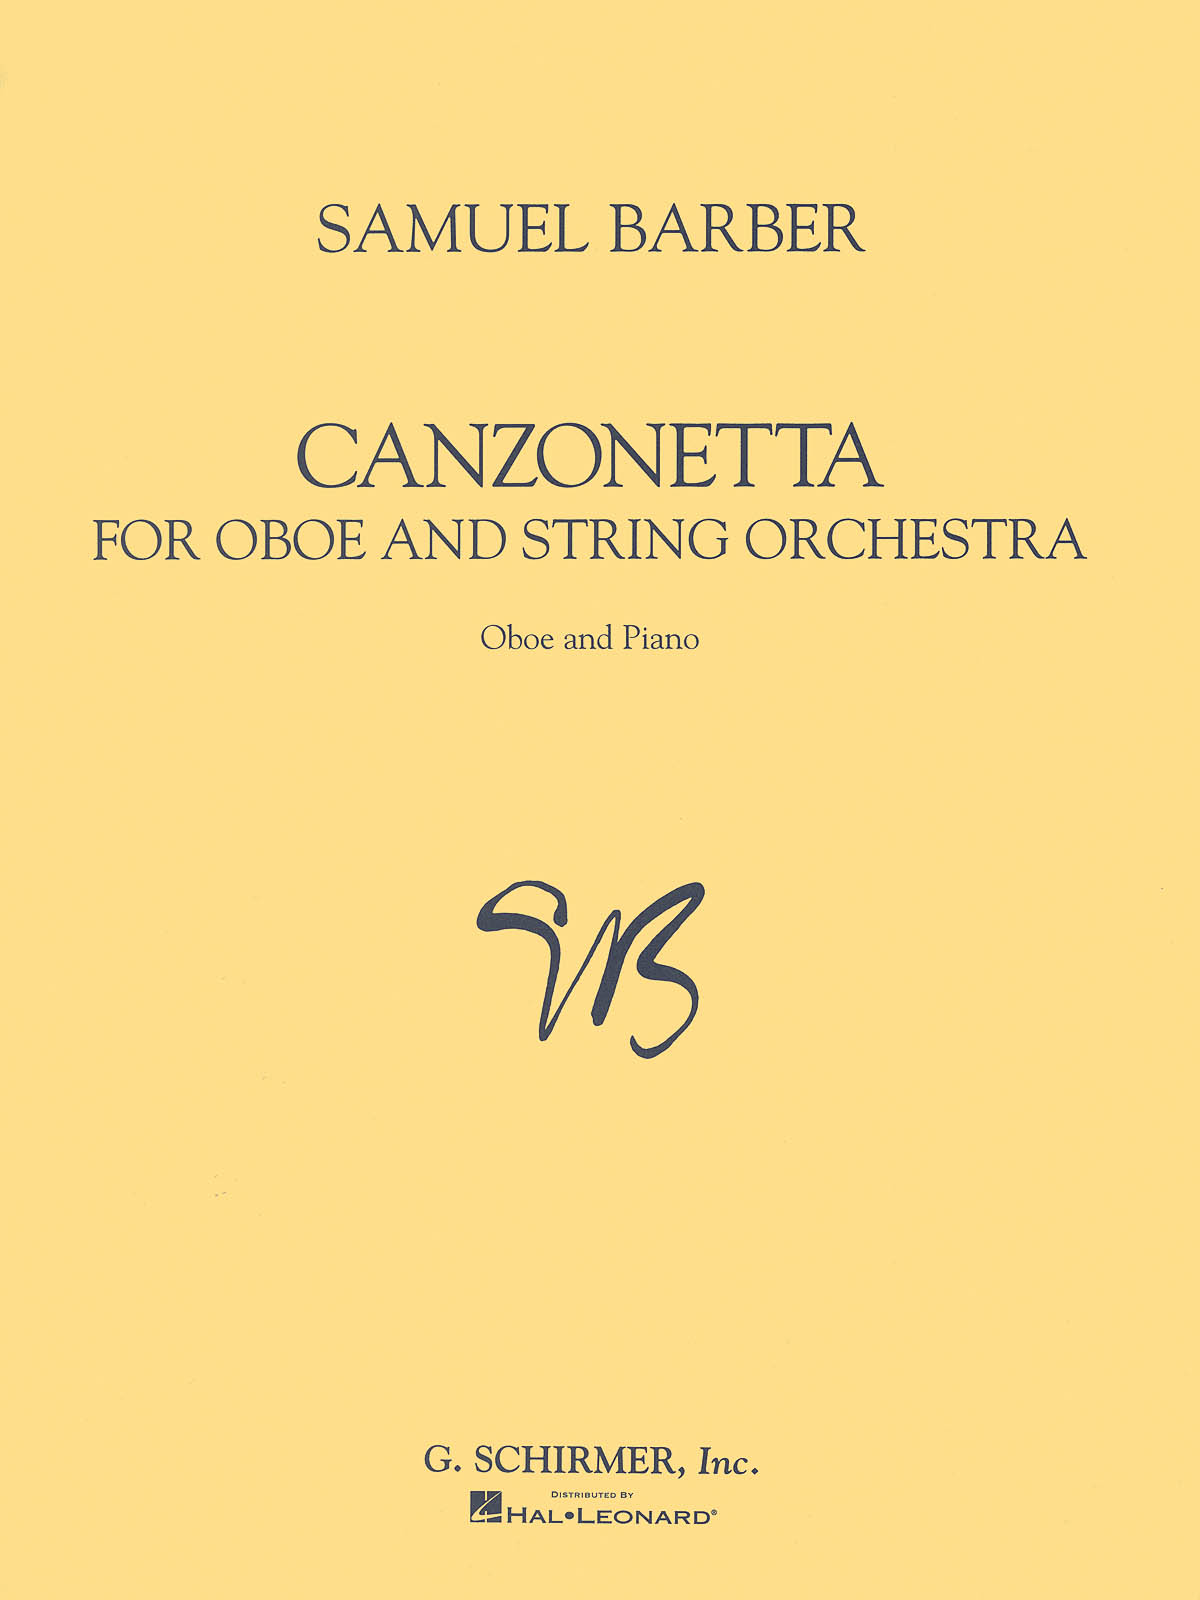 Barber adagio. Adagio for Strings, op. 11 Samuel Barber. Samuel Barber - Capricorn Concerto. Samuel Barber - Adagio for Strings Klavier. Adagio for Strings Samuel Barber слушать 2 скрипка.